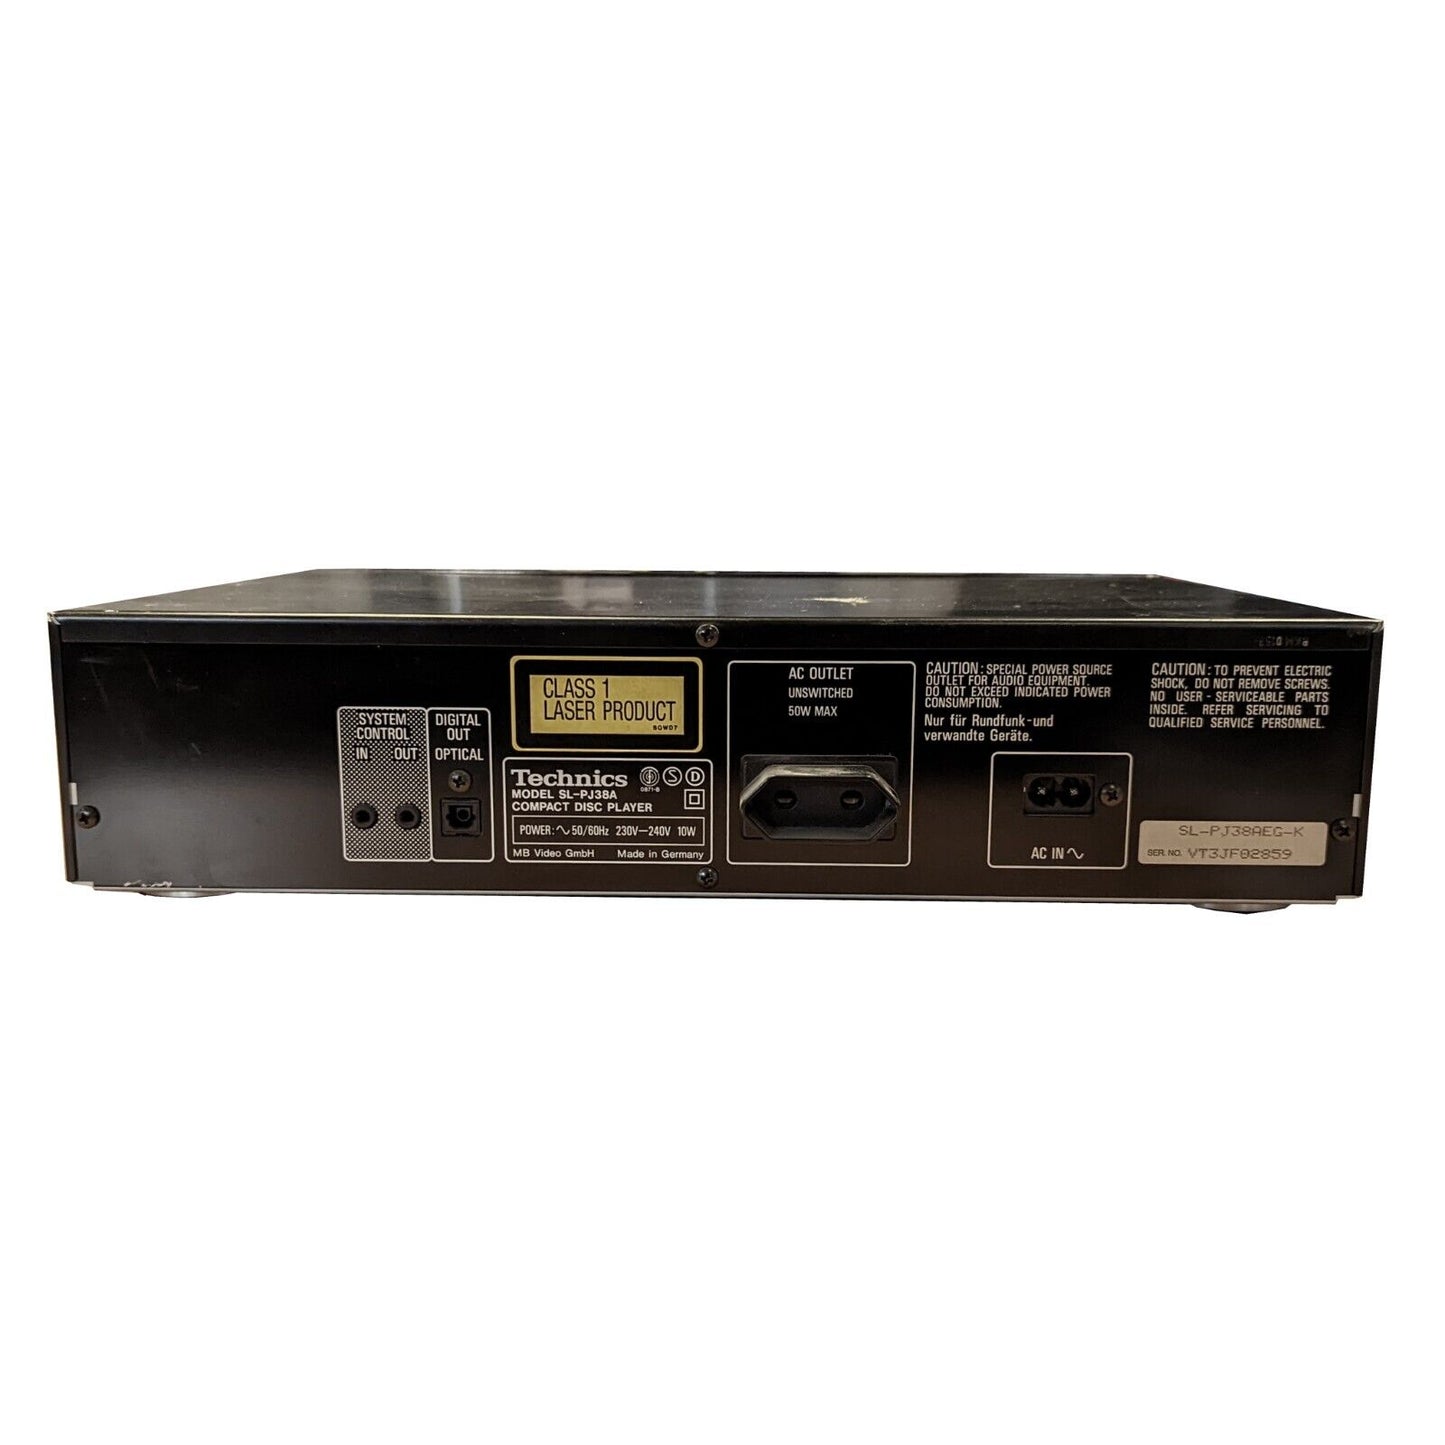 Optical Audio Compact Disc Player Technics SL-PJ38a - USADO